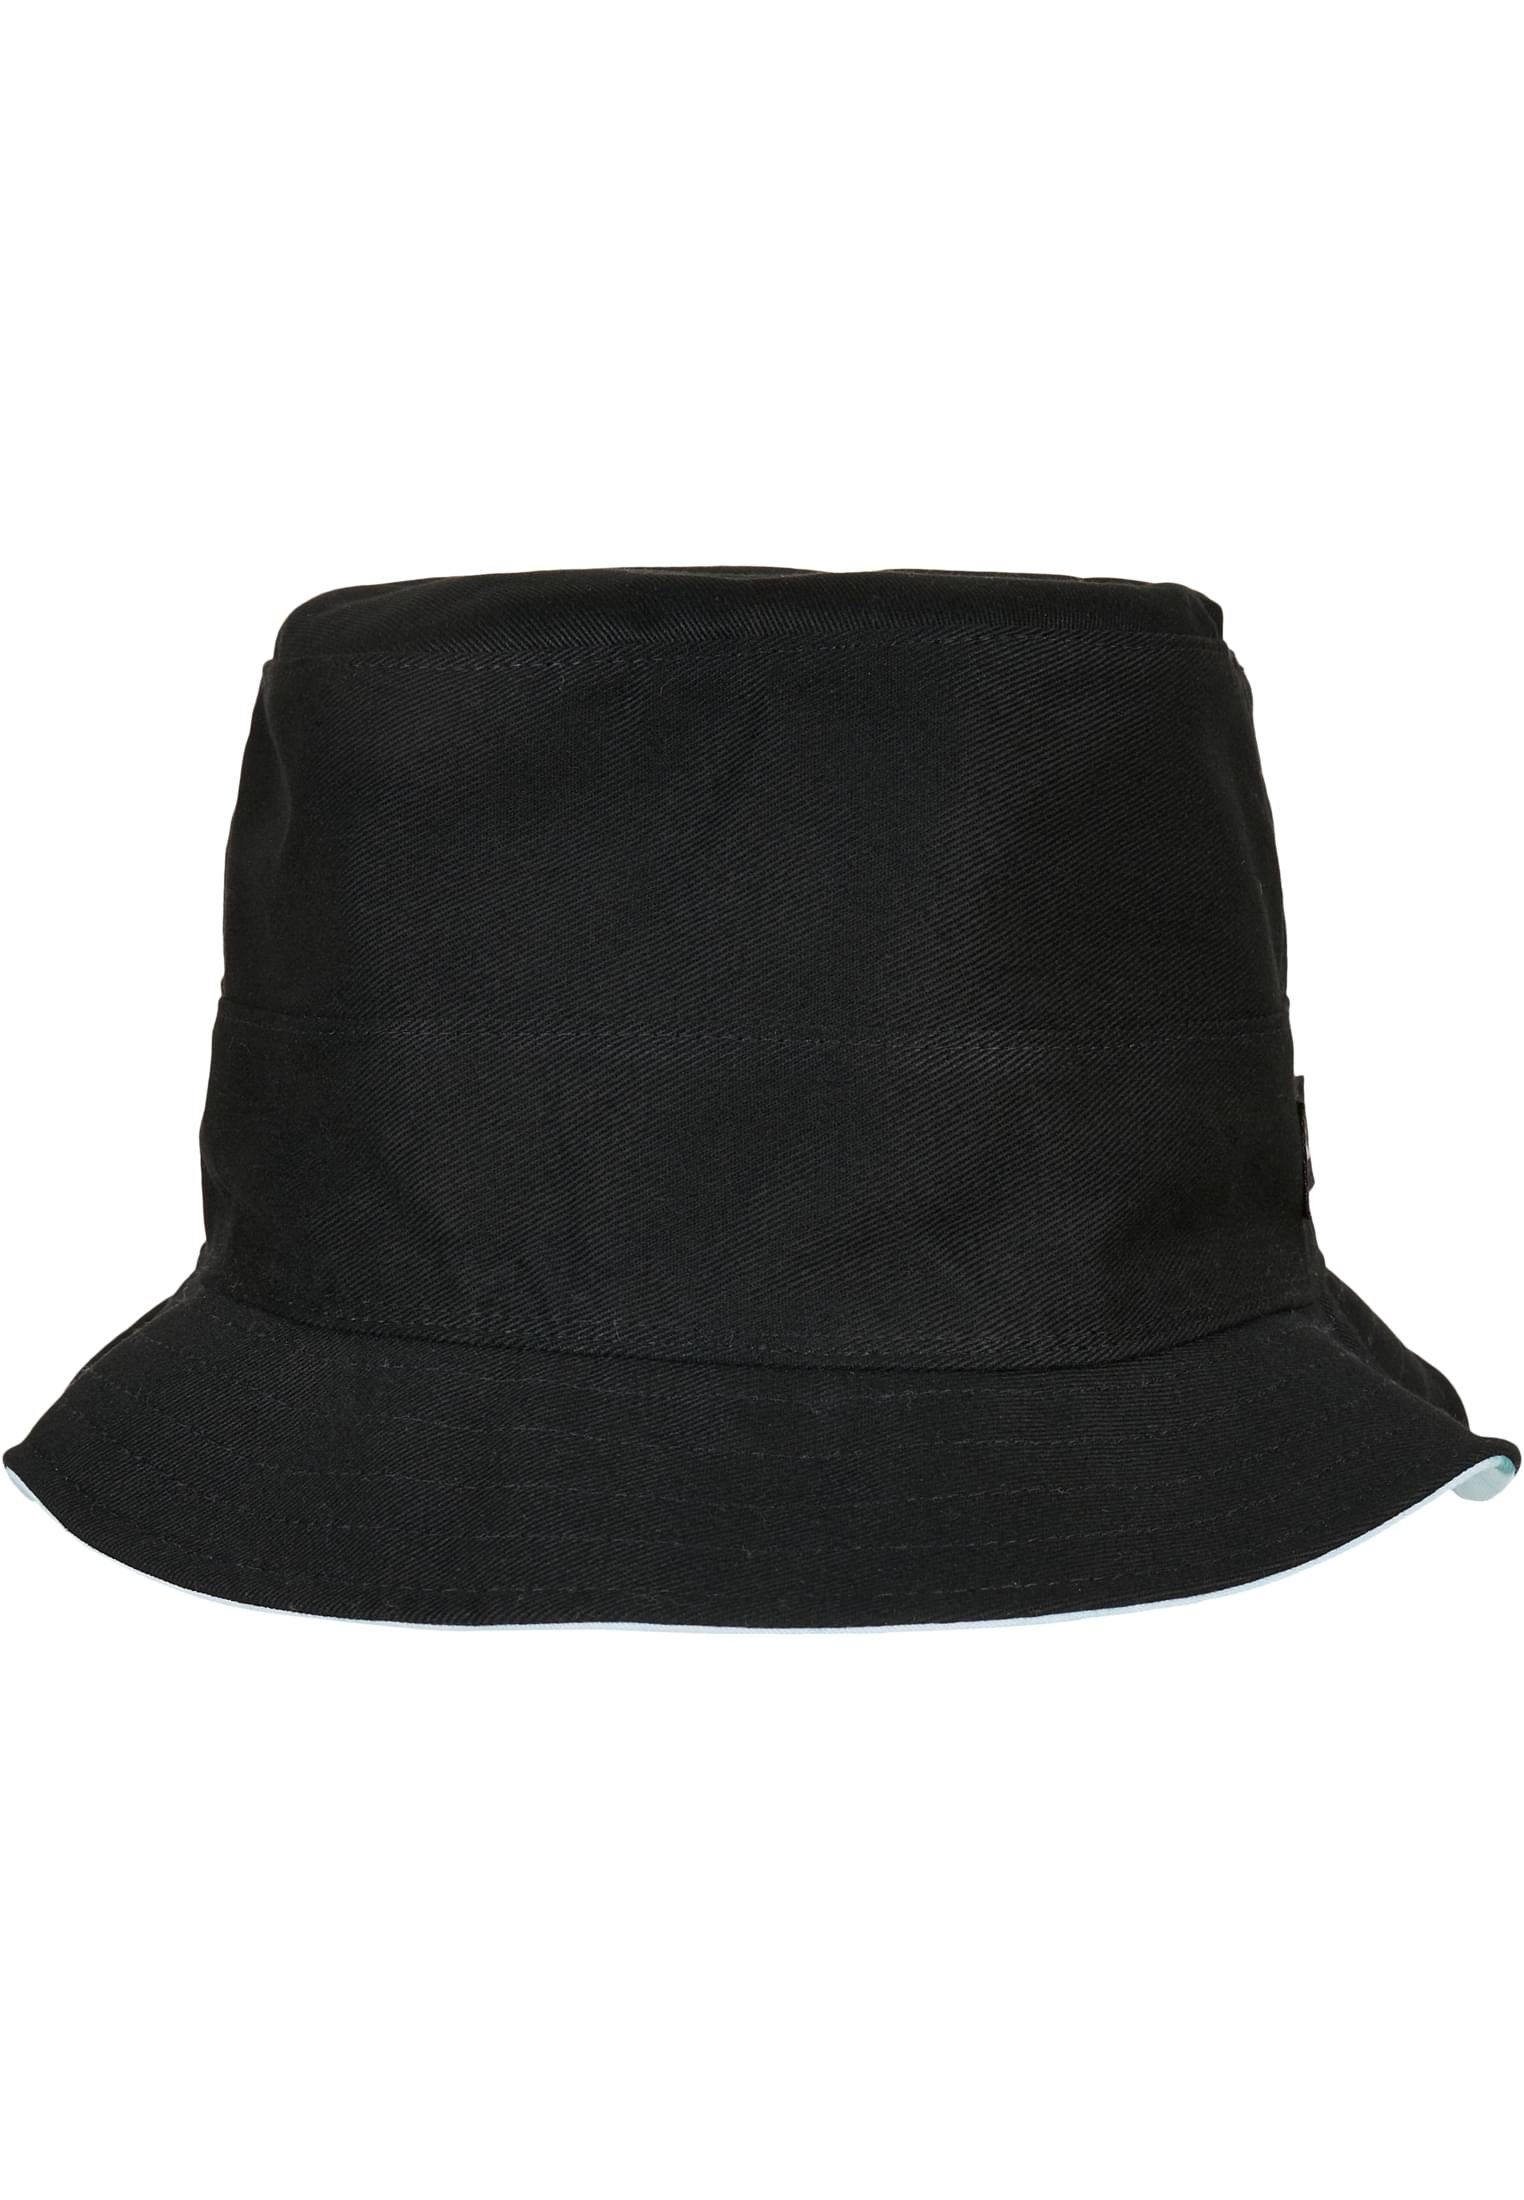 Feelin C&S SONS Reversible & Hat Bucket Foam Cap CAYLER Good Accessoires Flex